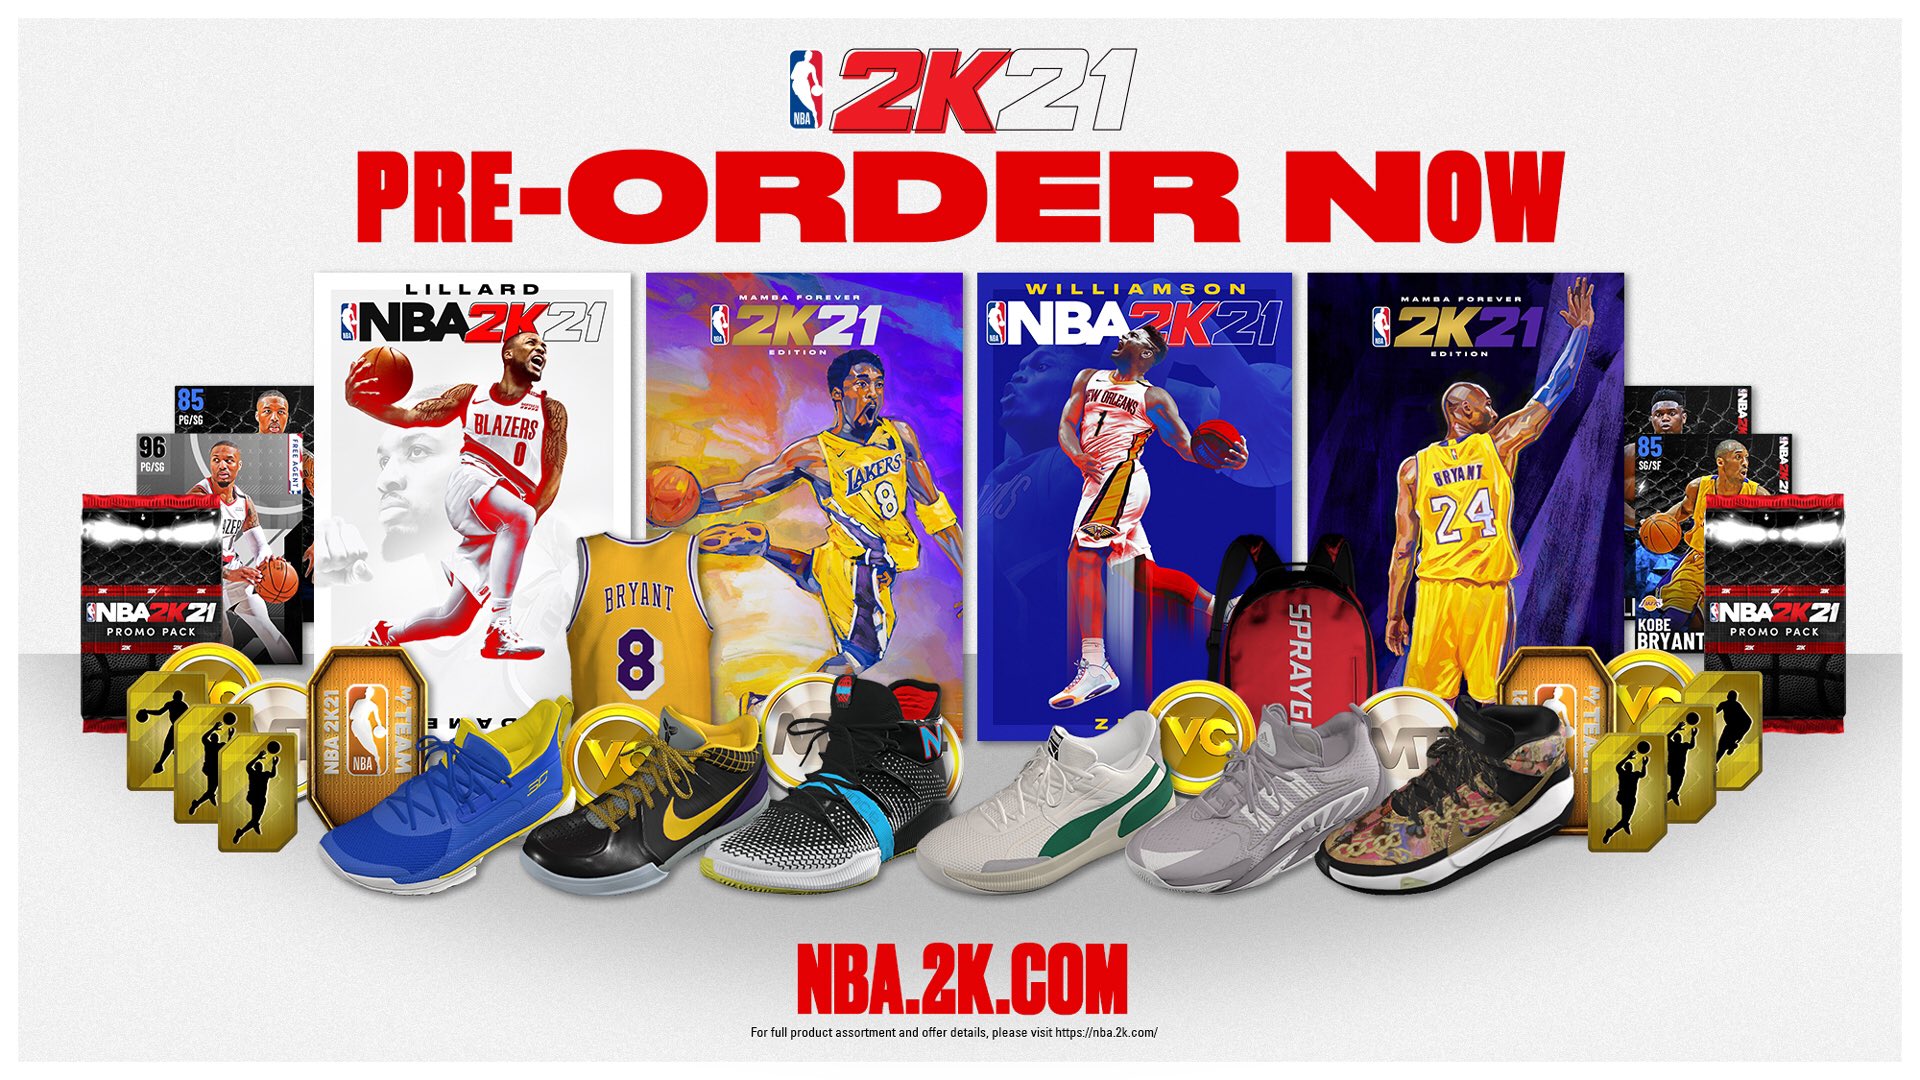 NBA 2K21 Presenting Mamba Forever Edition to Remember Kobe Bryant